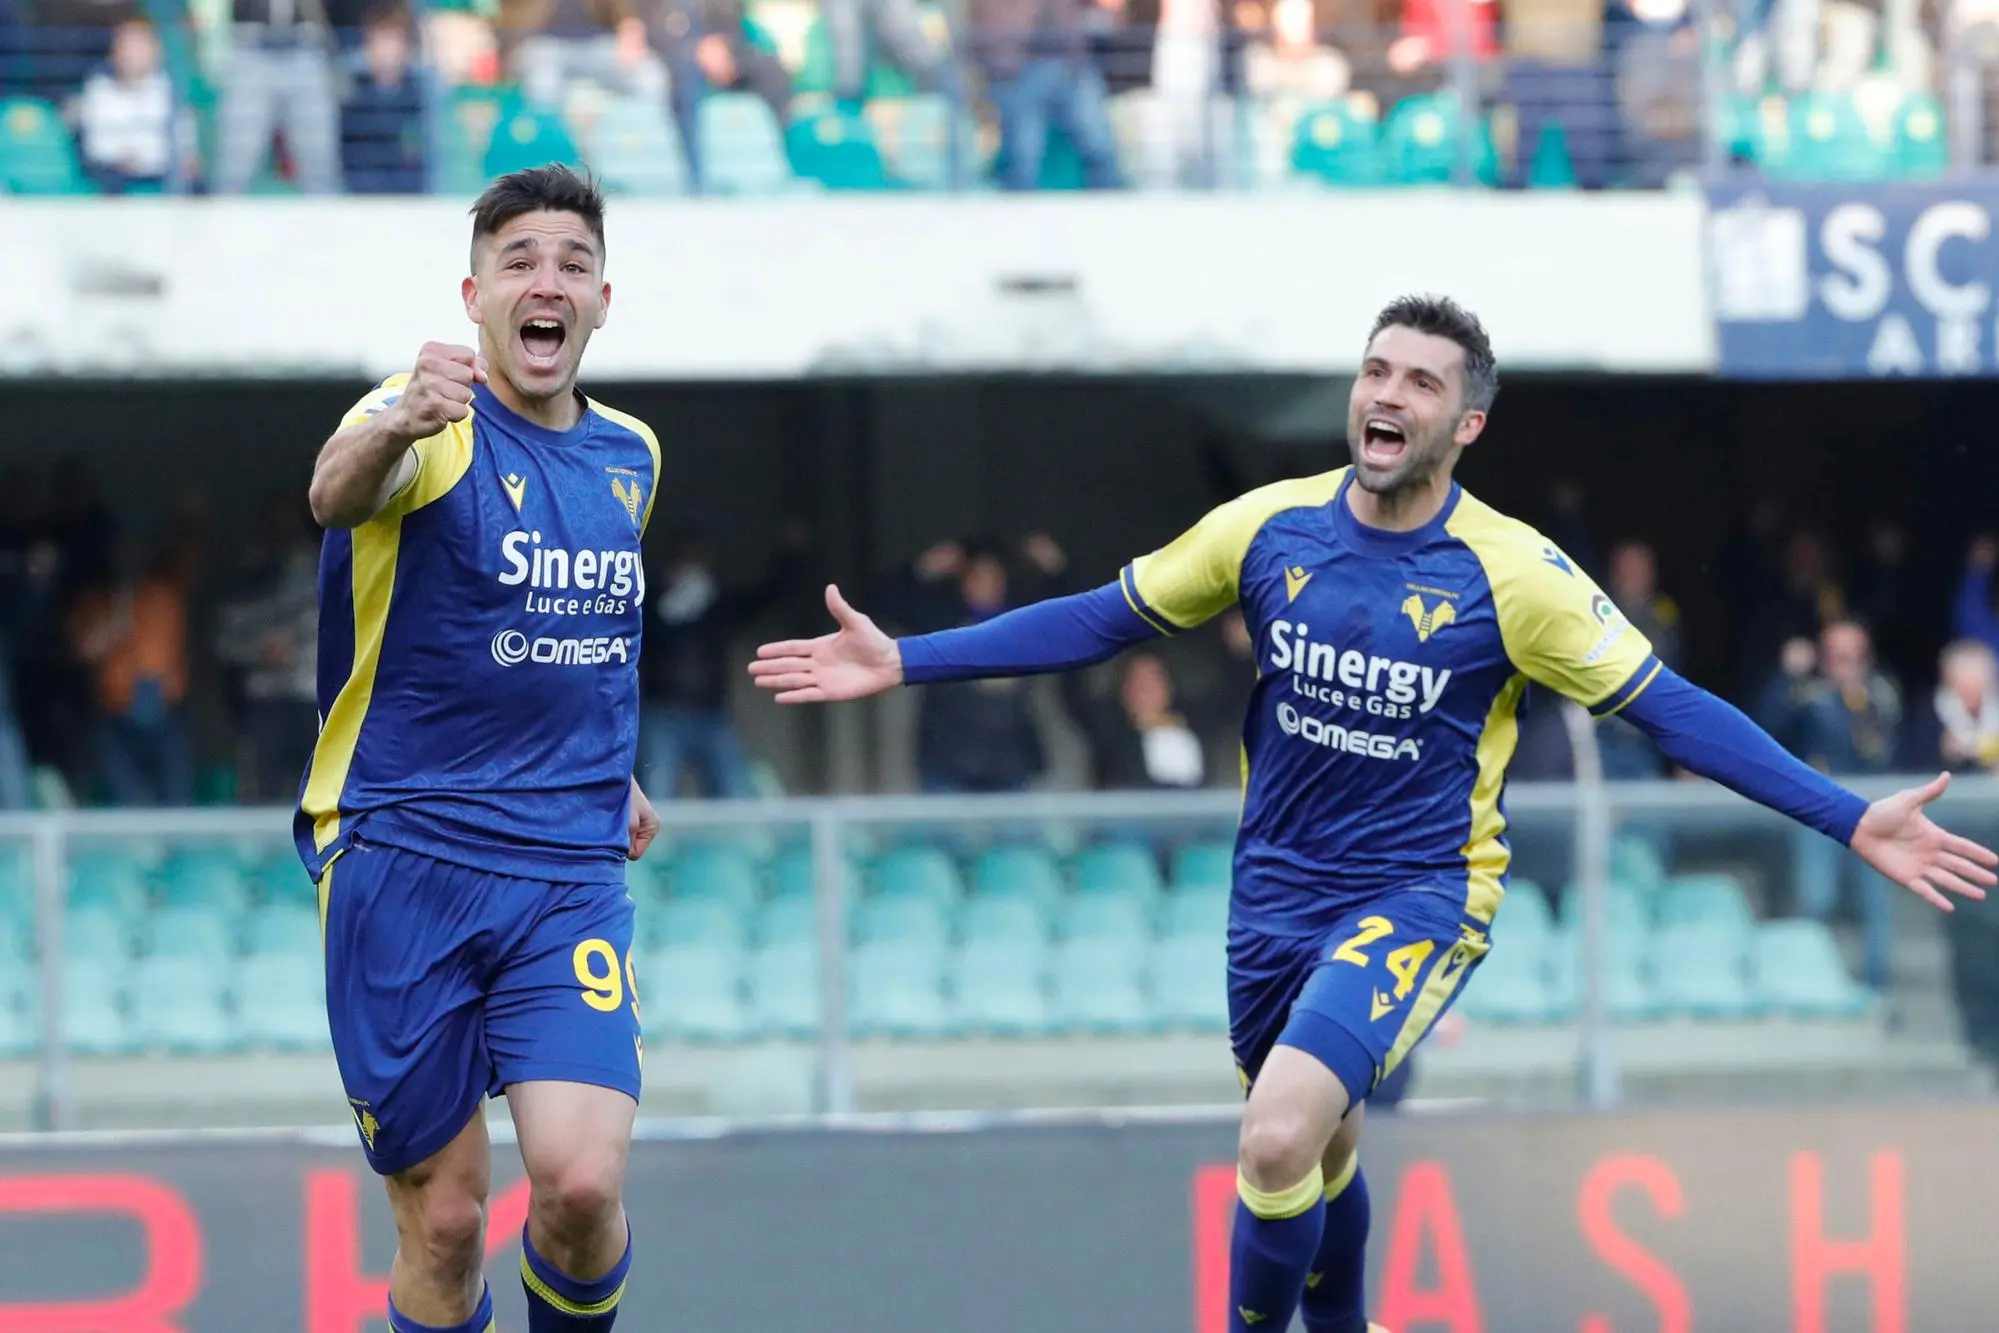 Simeone rejoices after a goal (Ansa)